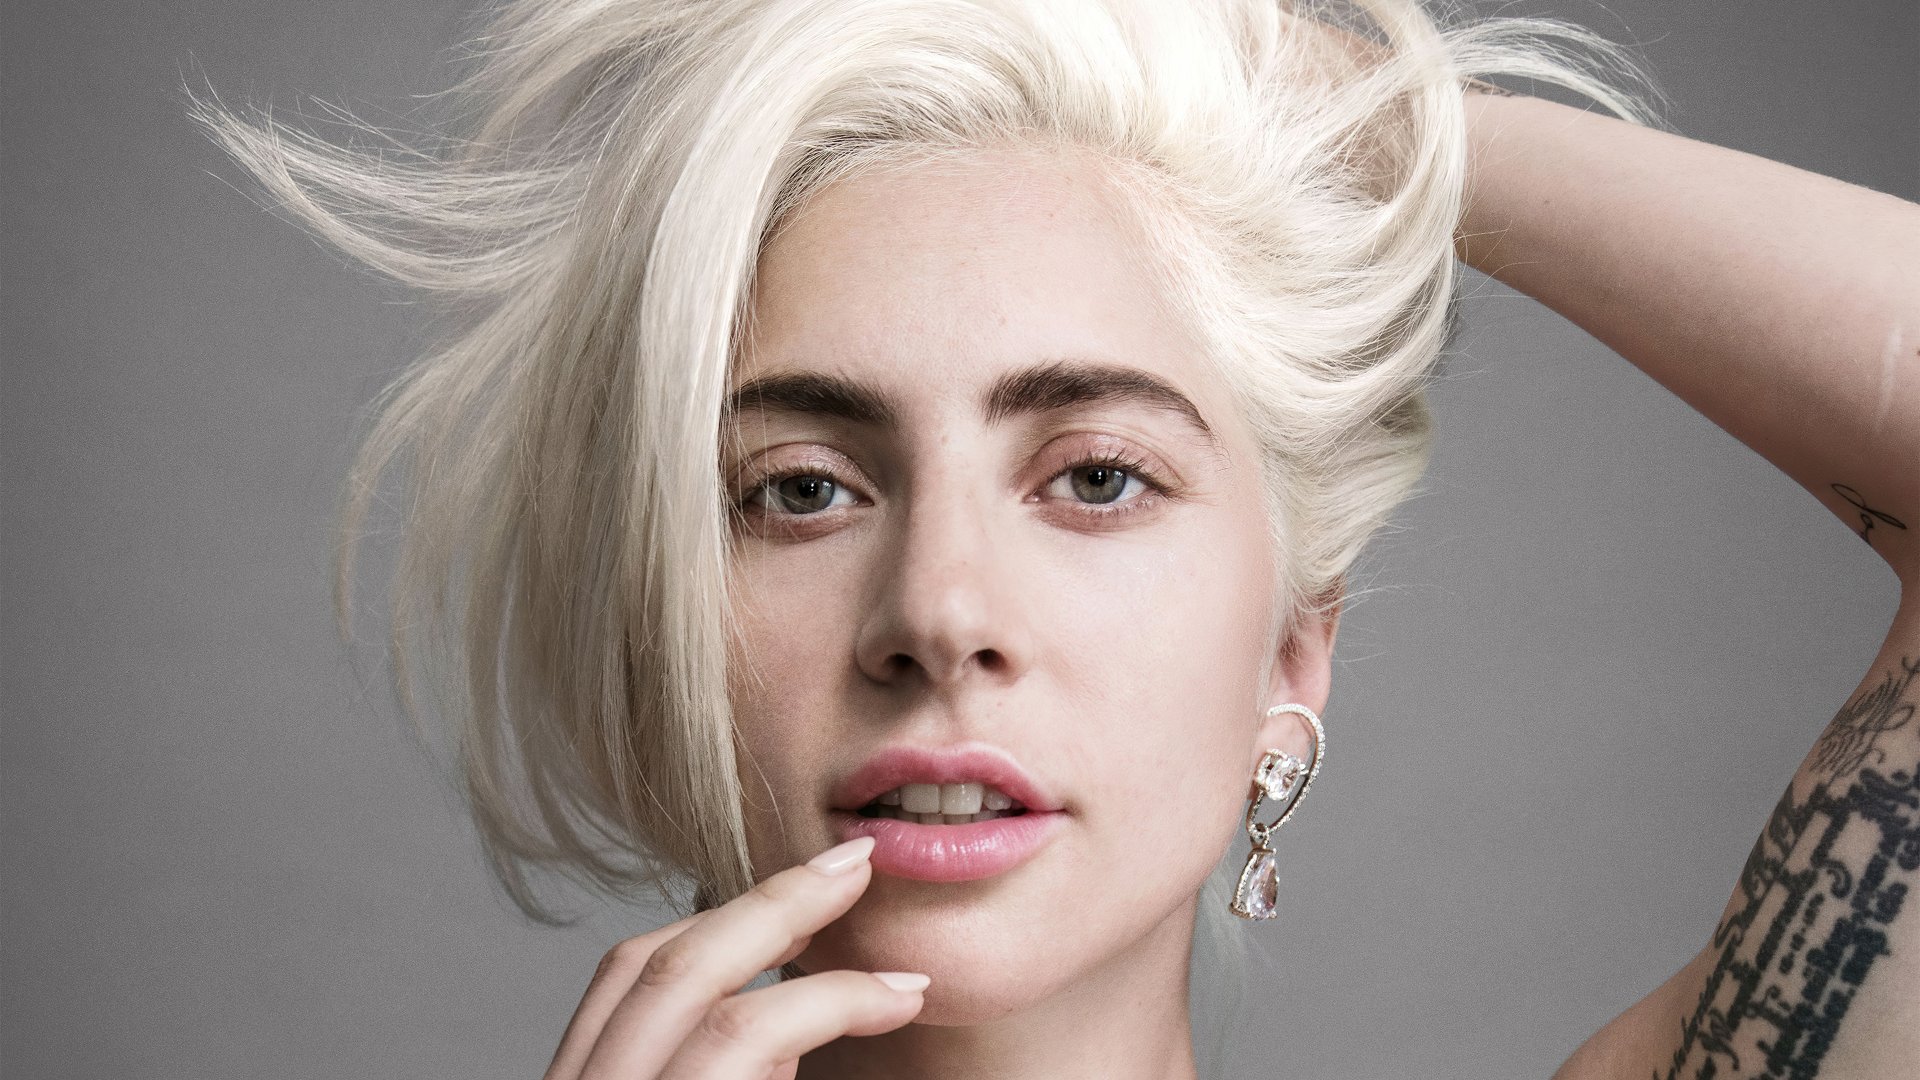 Lady Gaga Without Makeup 2021 Wallpaper 4k Hd Id7149 